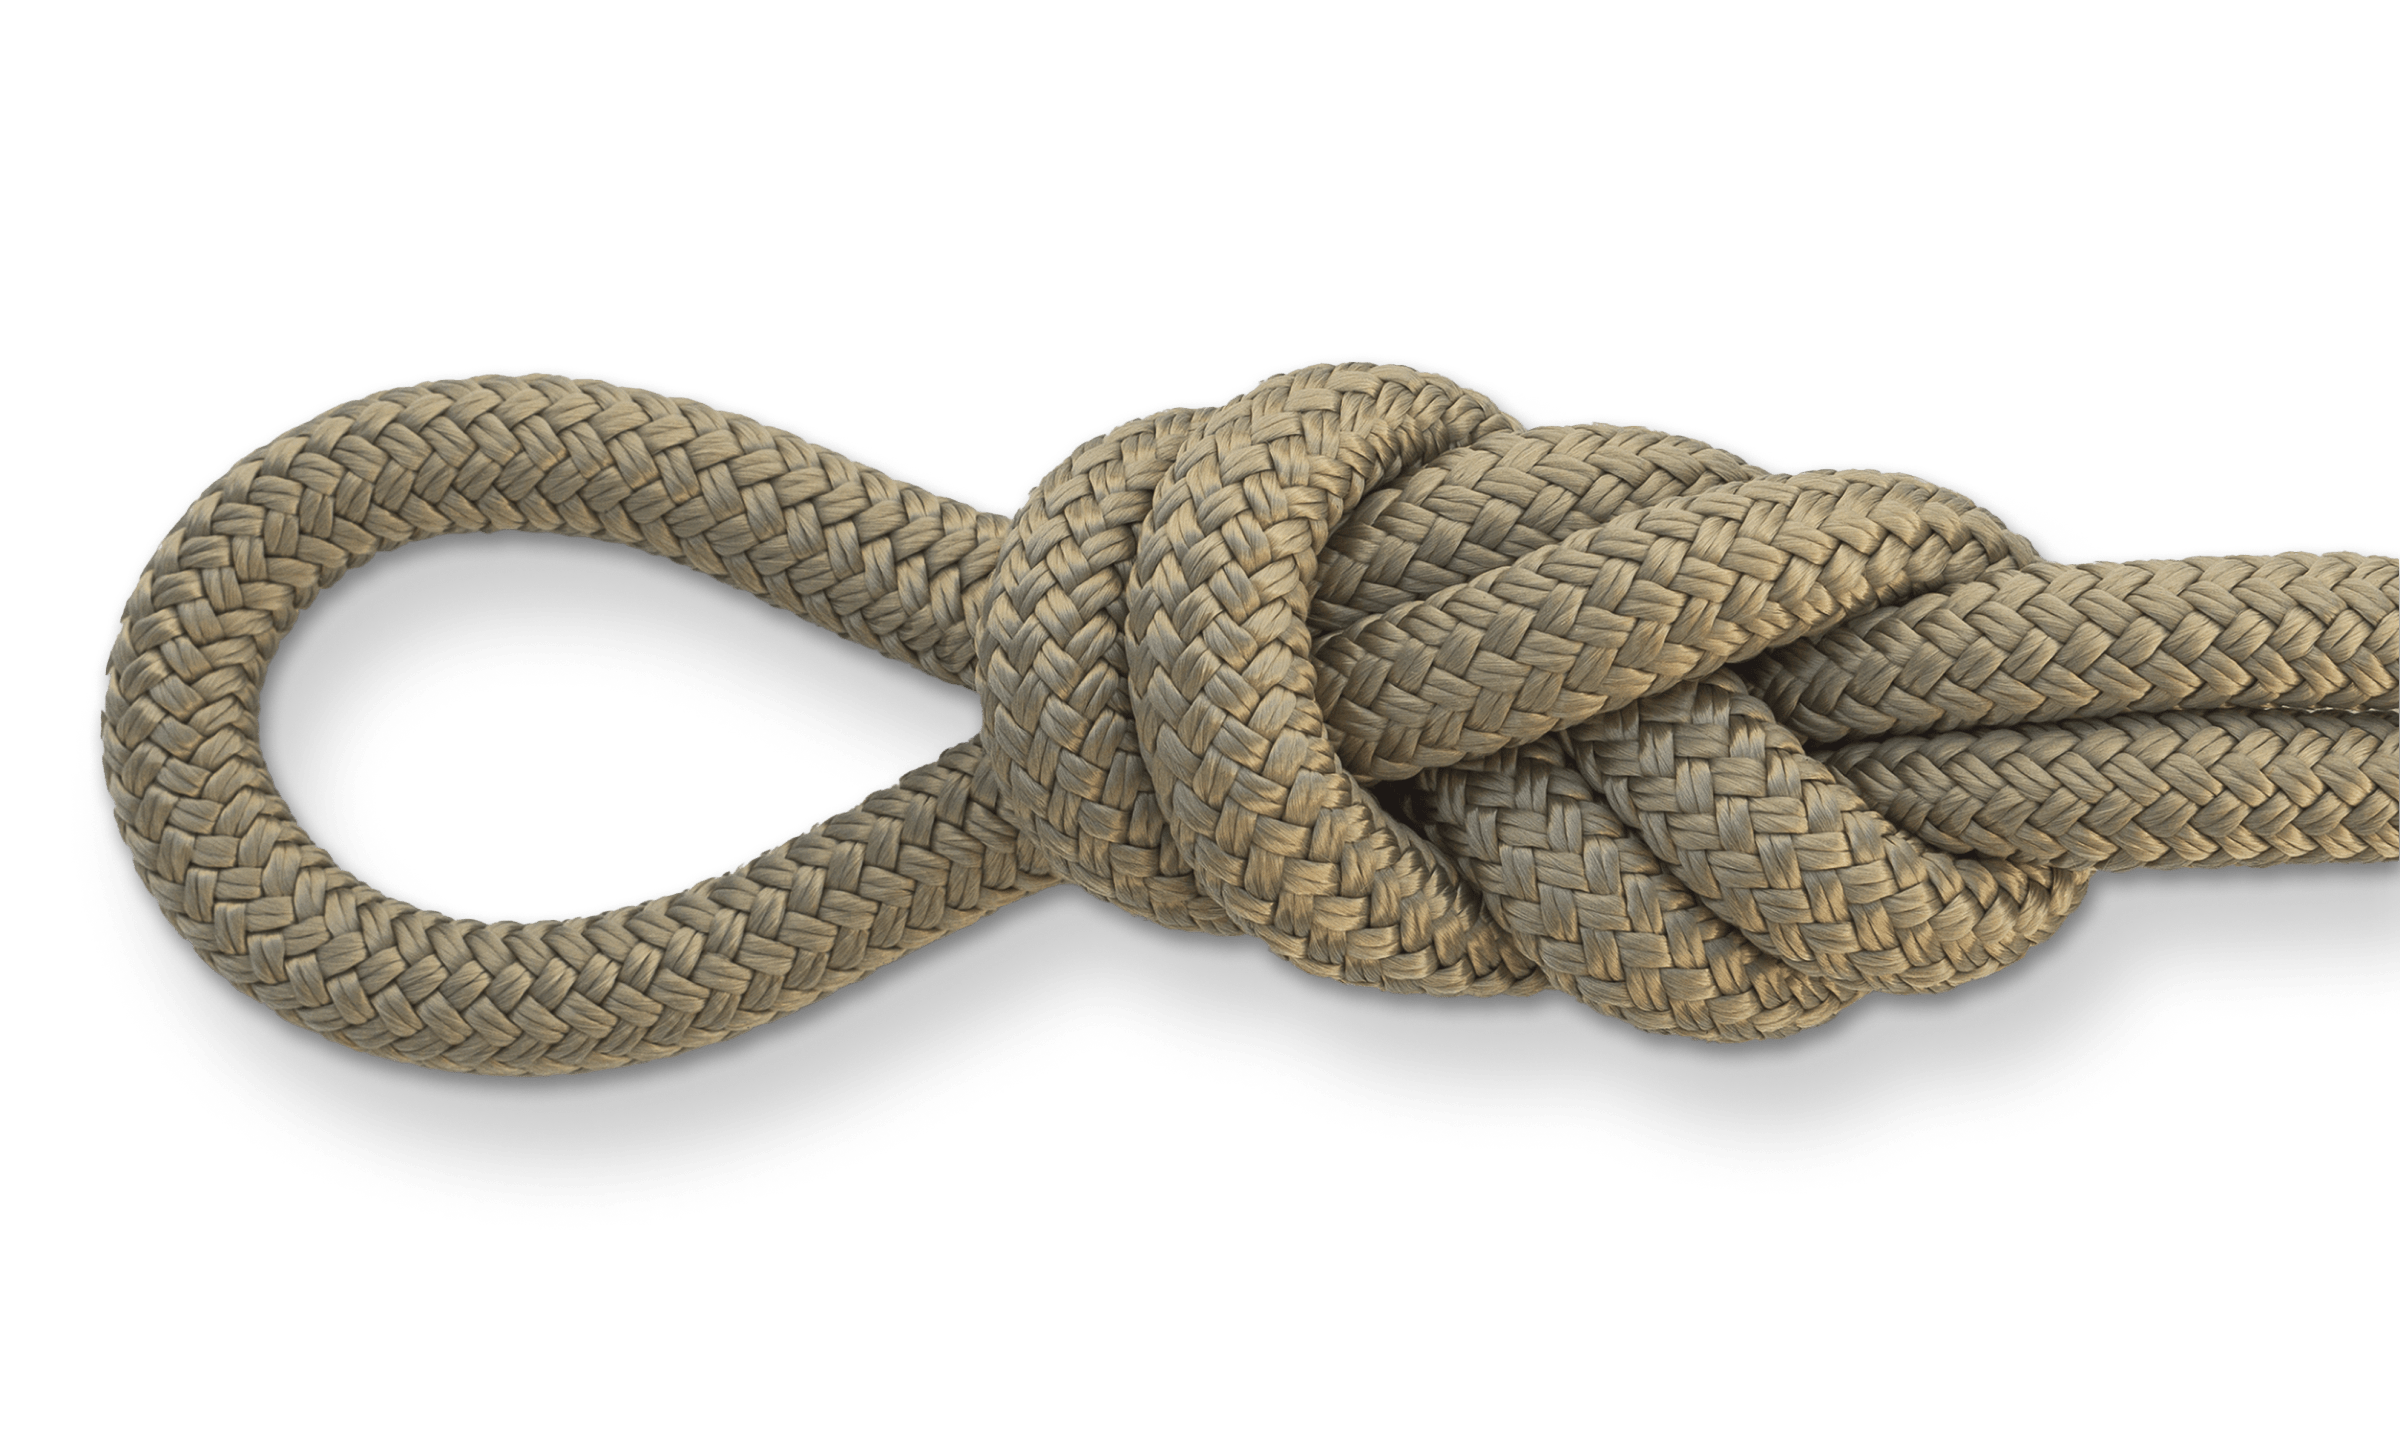 gold double braid nylon rope